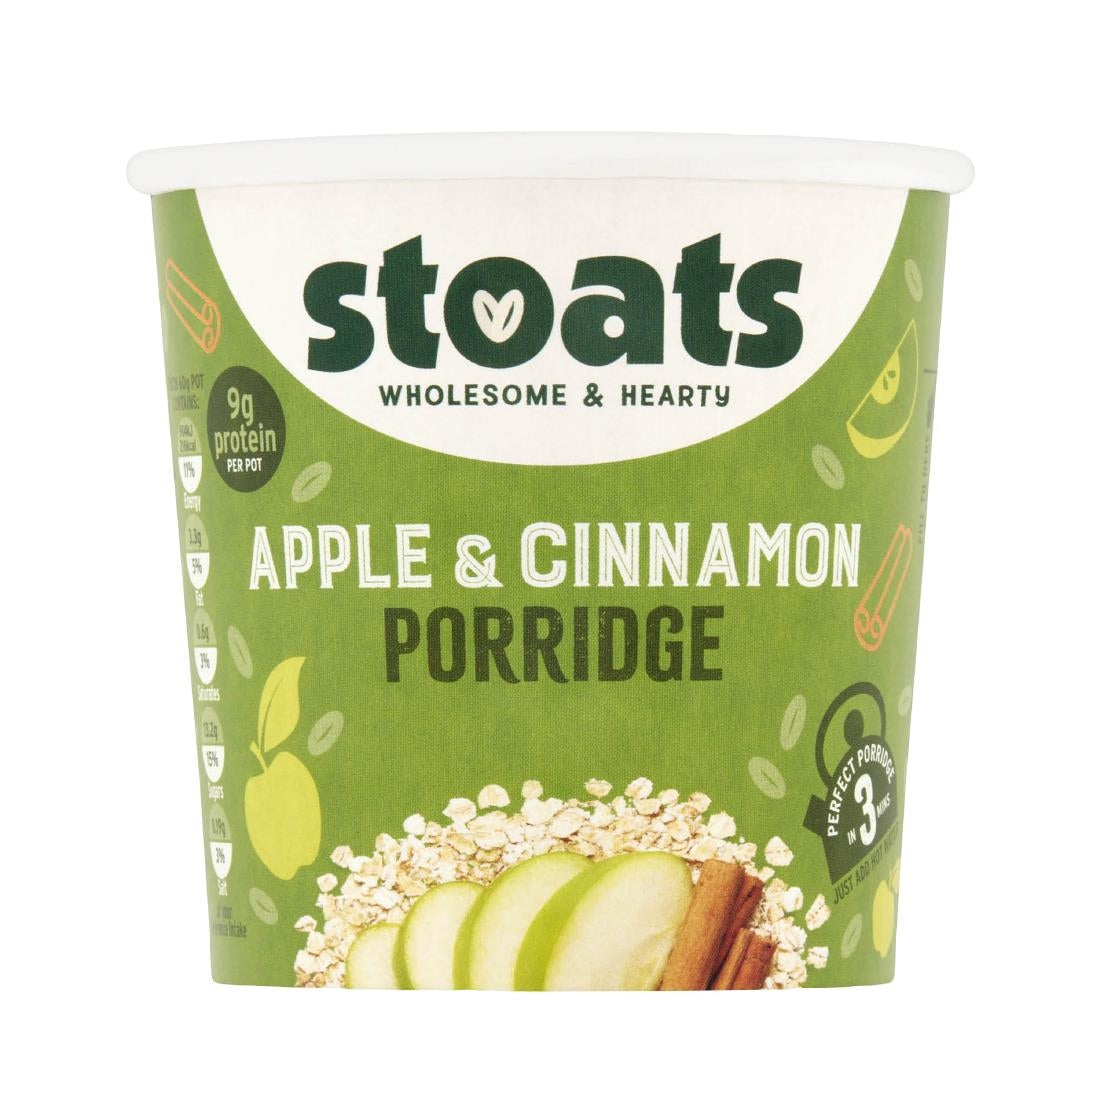 HS851 Stoats Apple & Cinnamon Porridge Pots 60g (Pack of 16)